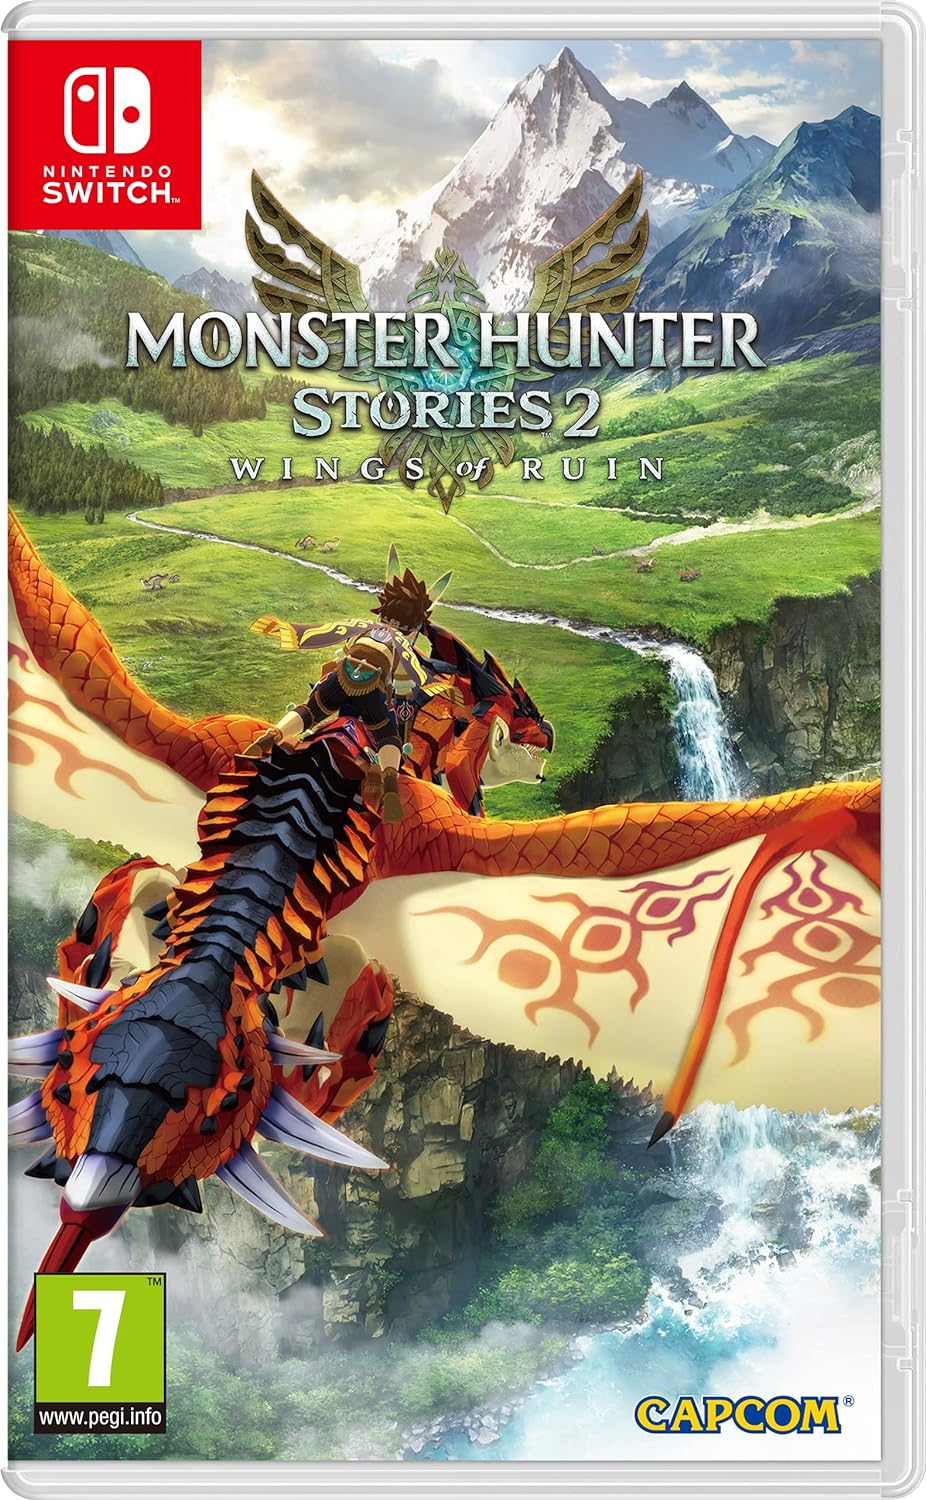 Monster Hunter Stories 2: Wings of Ruin Digital Download Key (Nintendo Switch): USA